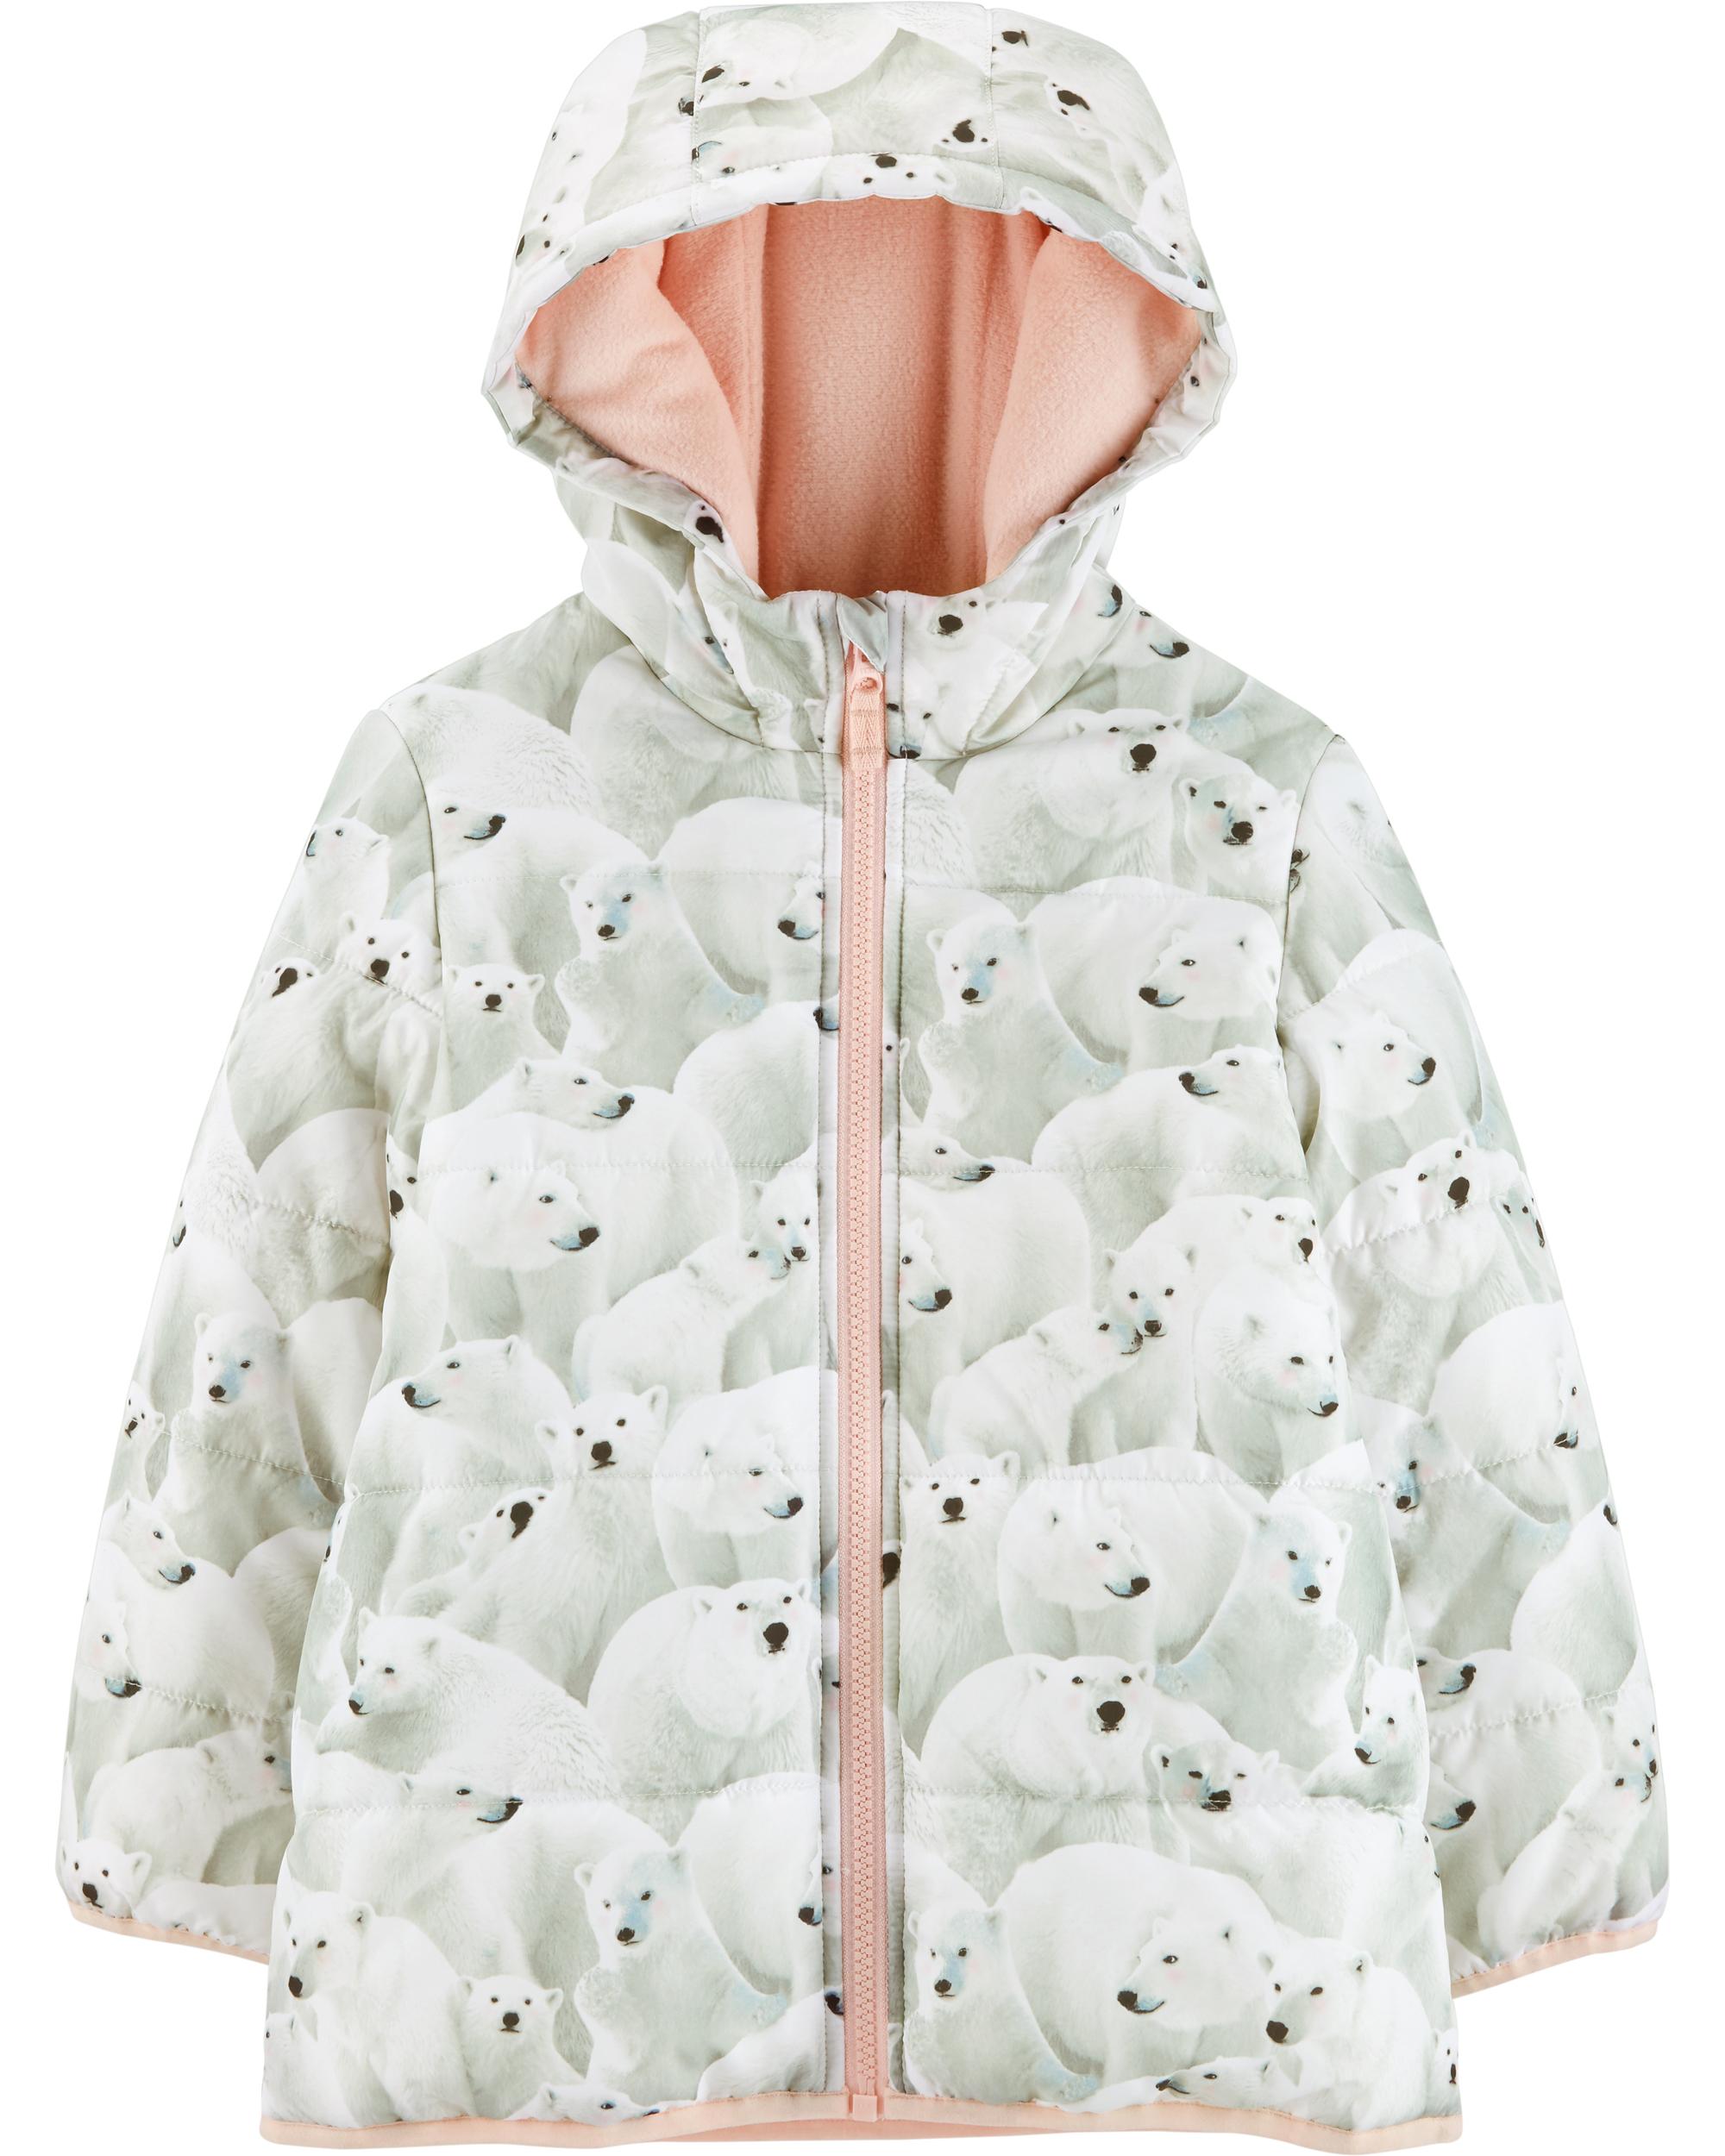 Polar Bear Puffer Jacket | oshkosh.com